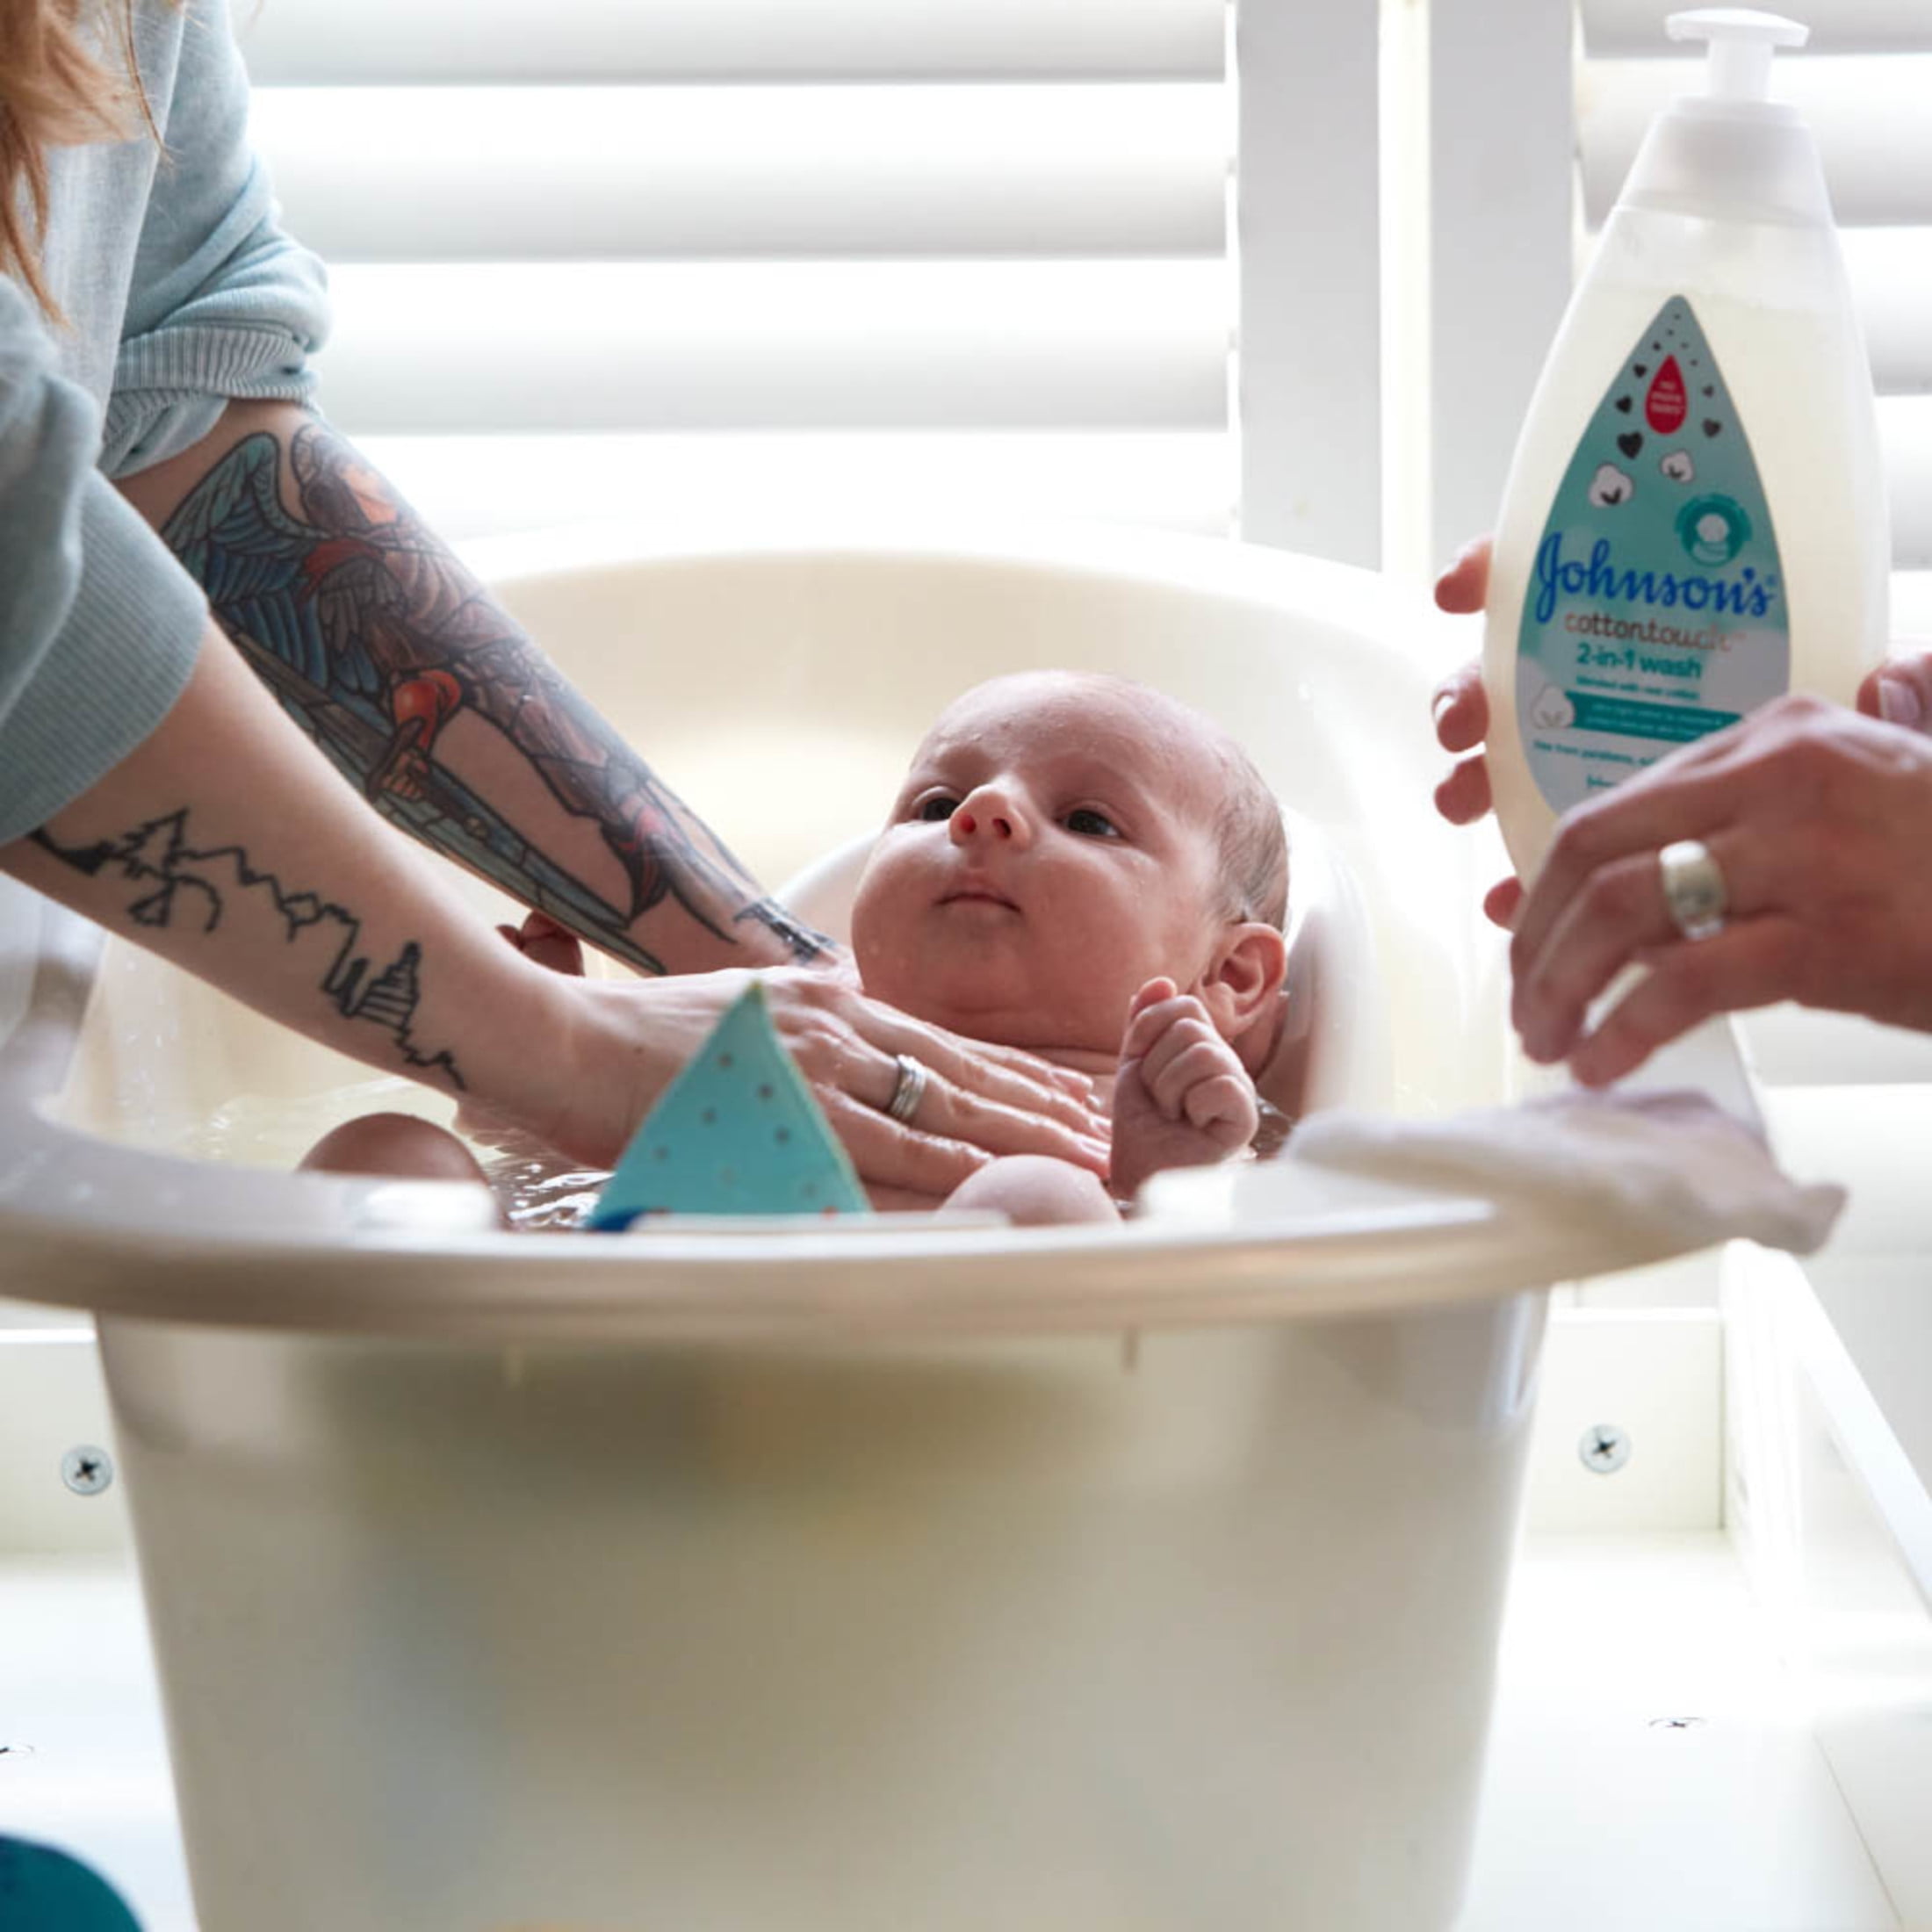 Johnson's CottonTouch Newborn Baby Shampoo and Body Wash Soap, 13.6 oz 